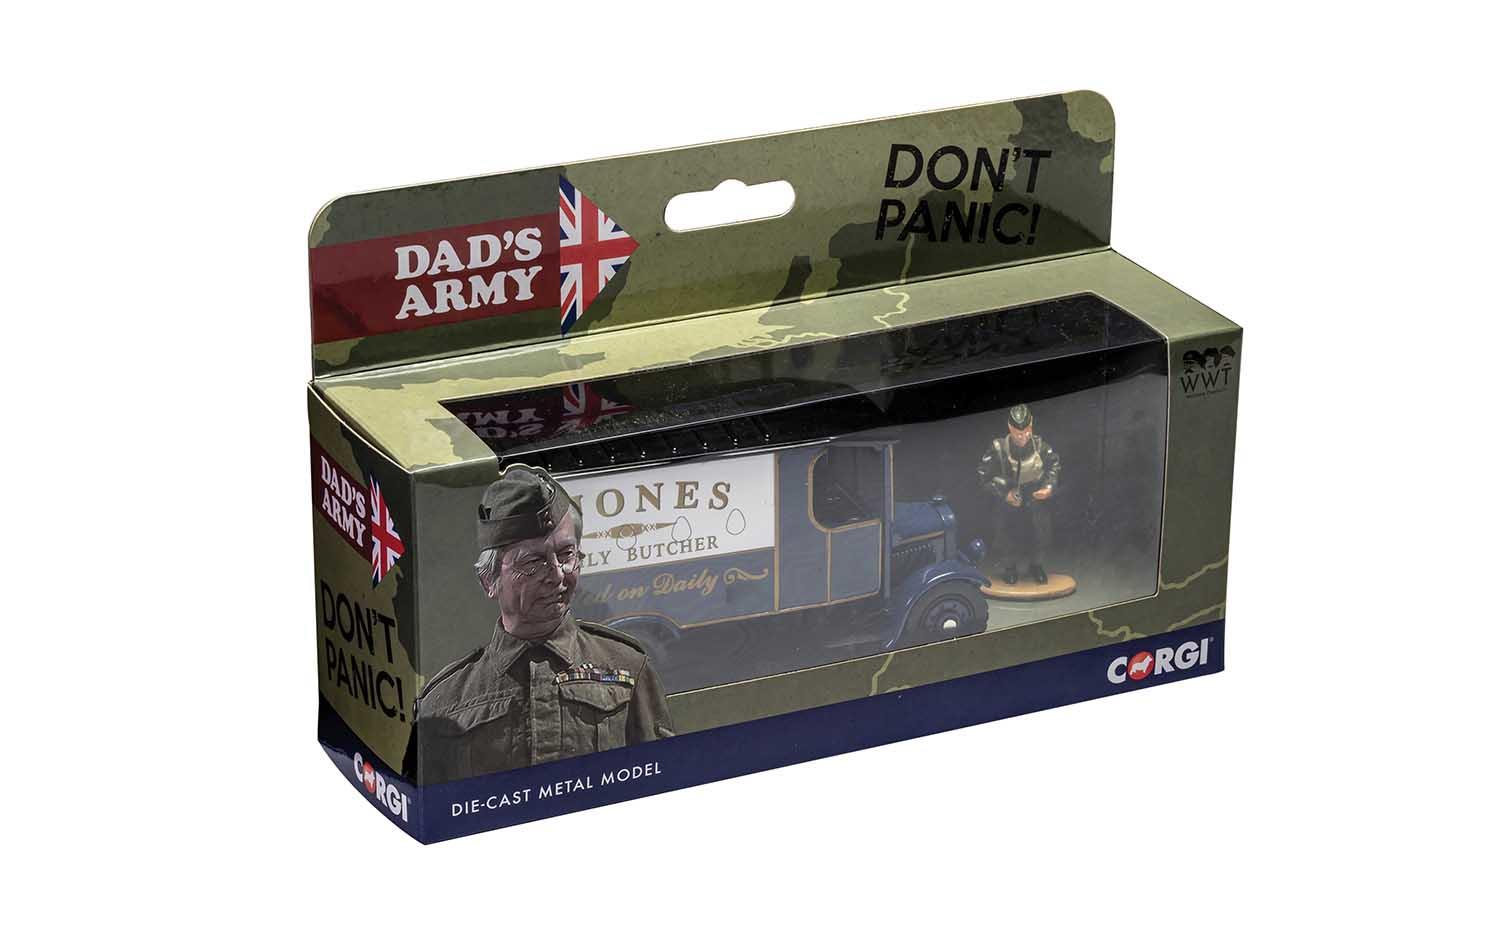 Dad’s Army J Jones Thonrycroft Van